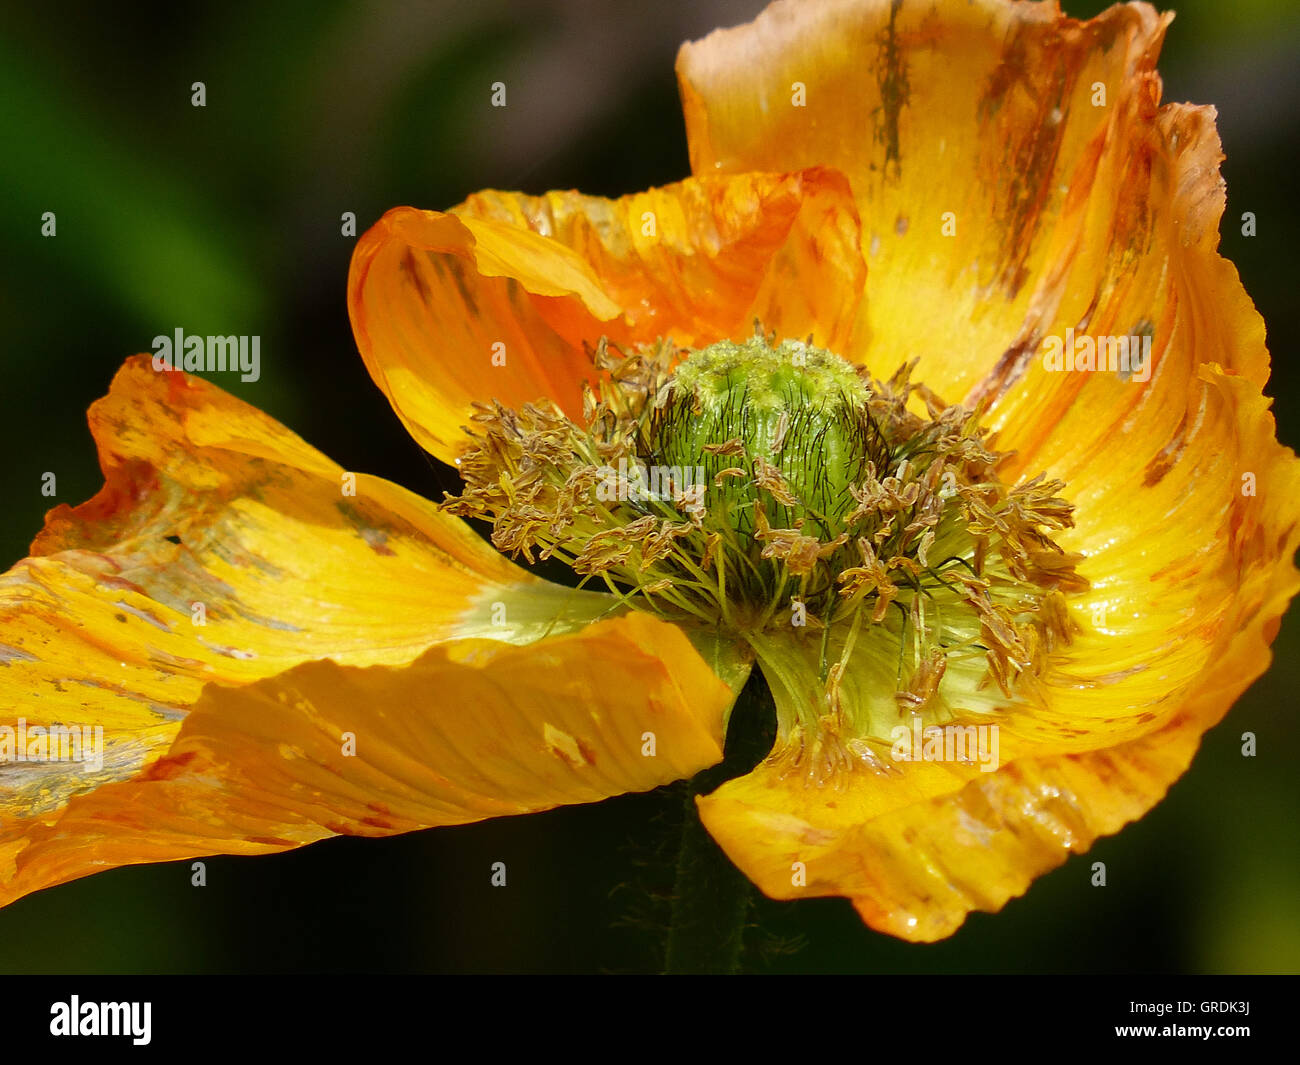 Iceland Poppy, Papaver Nudicaule, Poppy Plant In Northern Europe, Dark Green Background Stock Photo